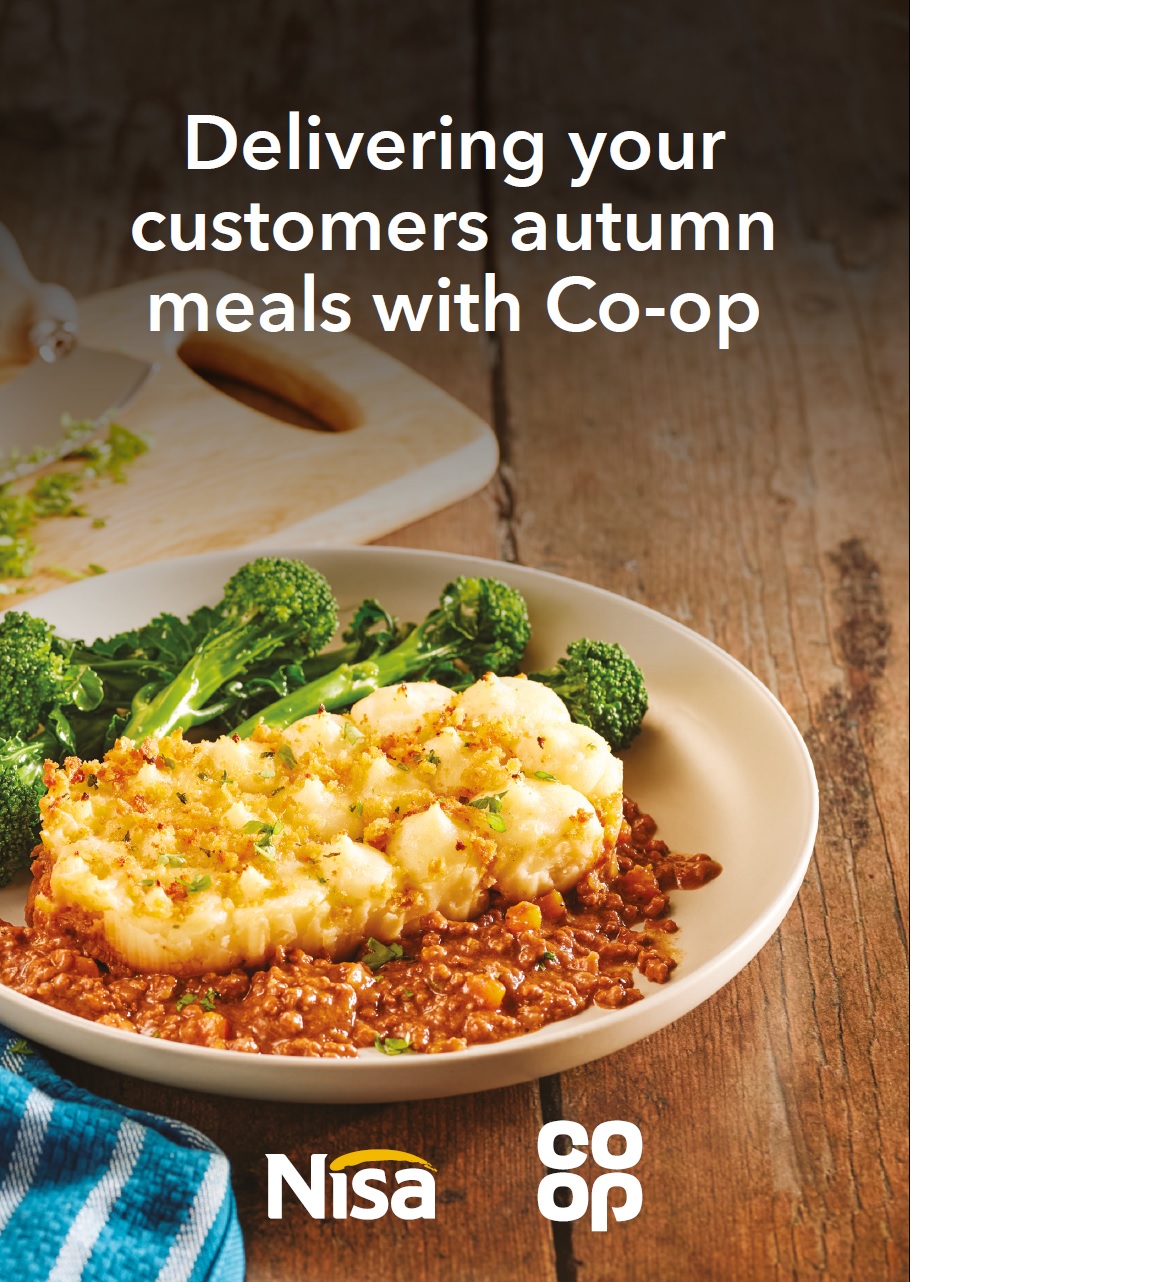 Nisa launches new range of comfort food meals